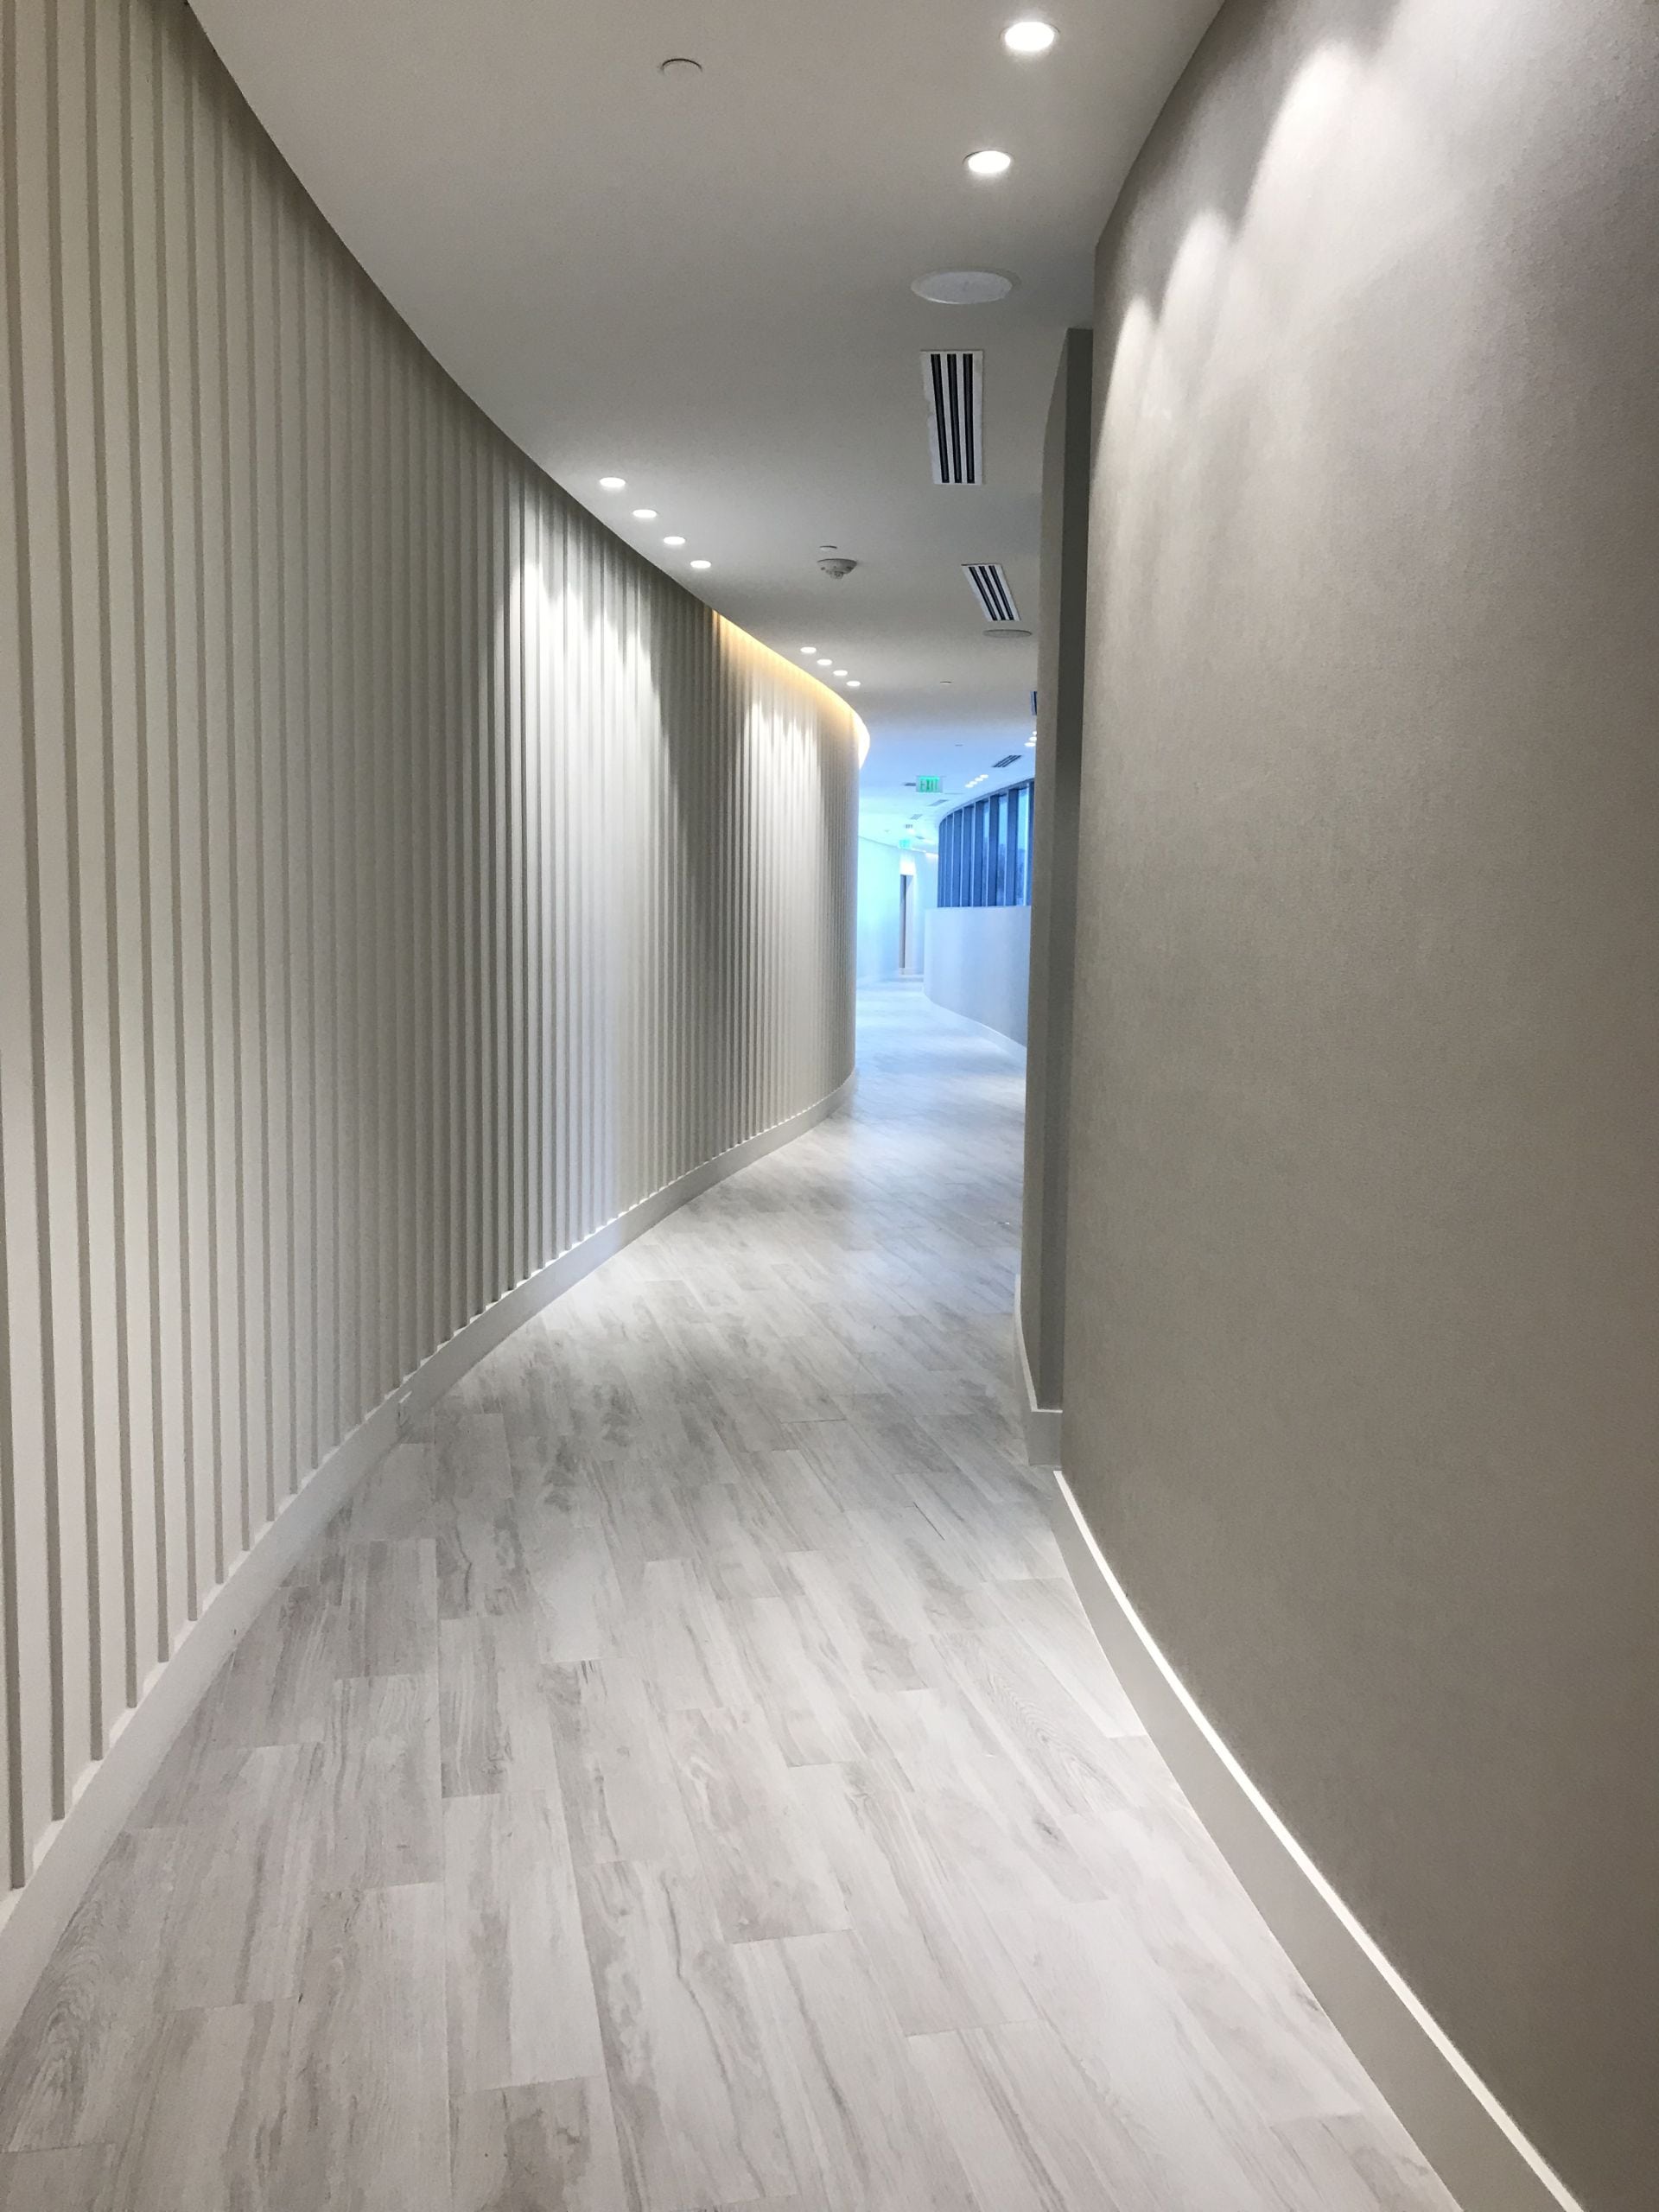 Park Grove hallway to amenities